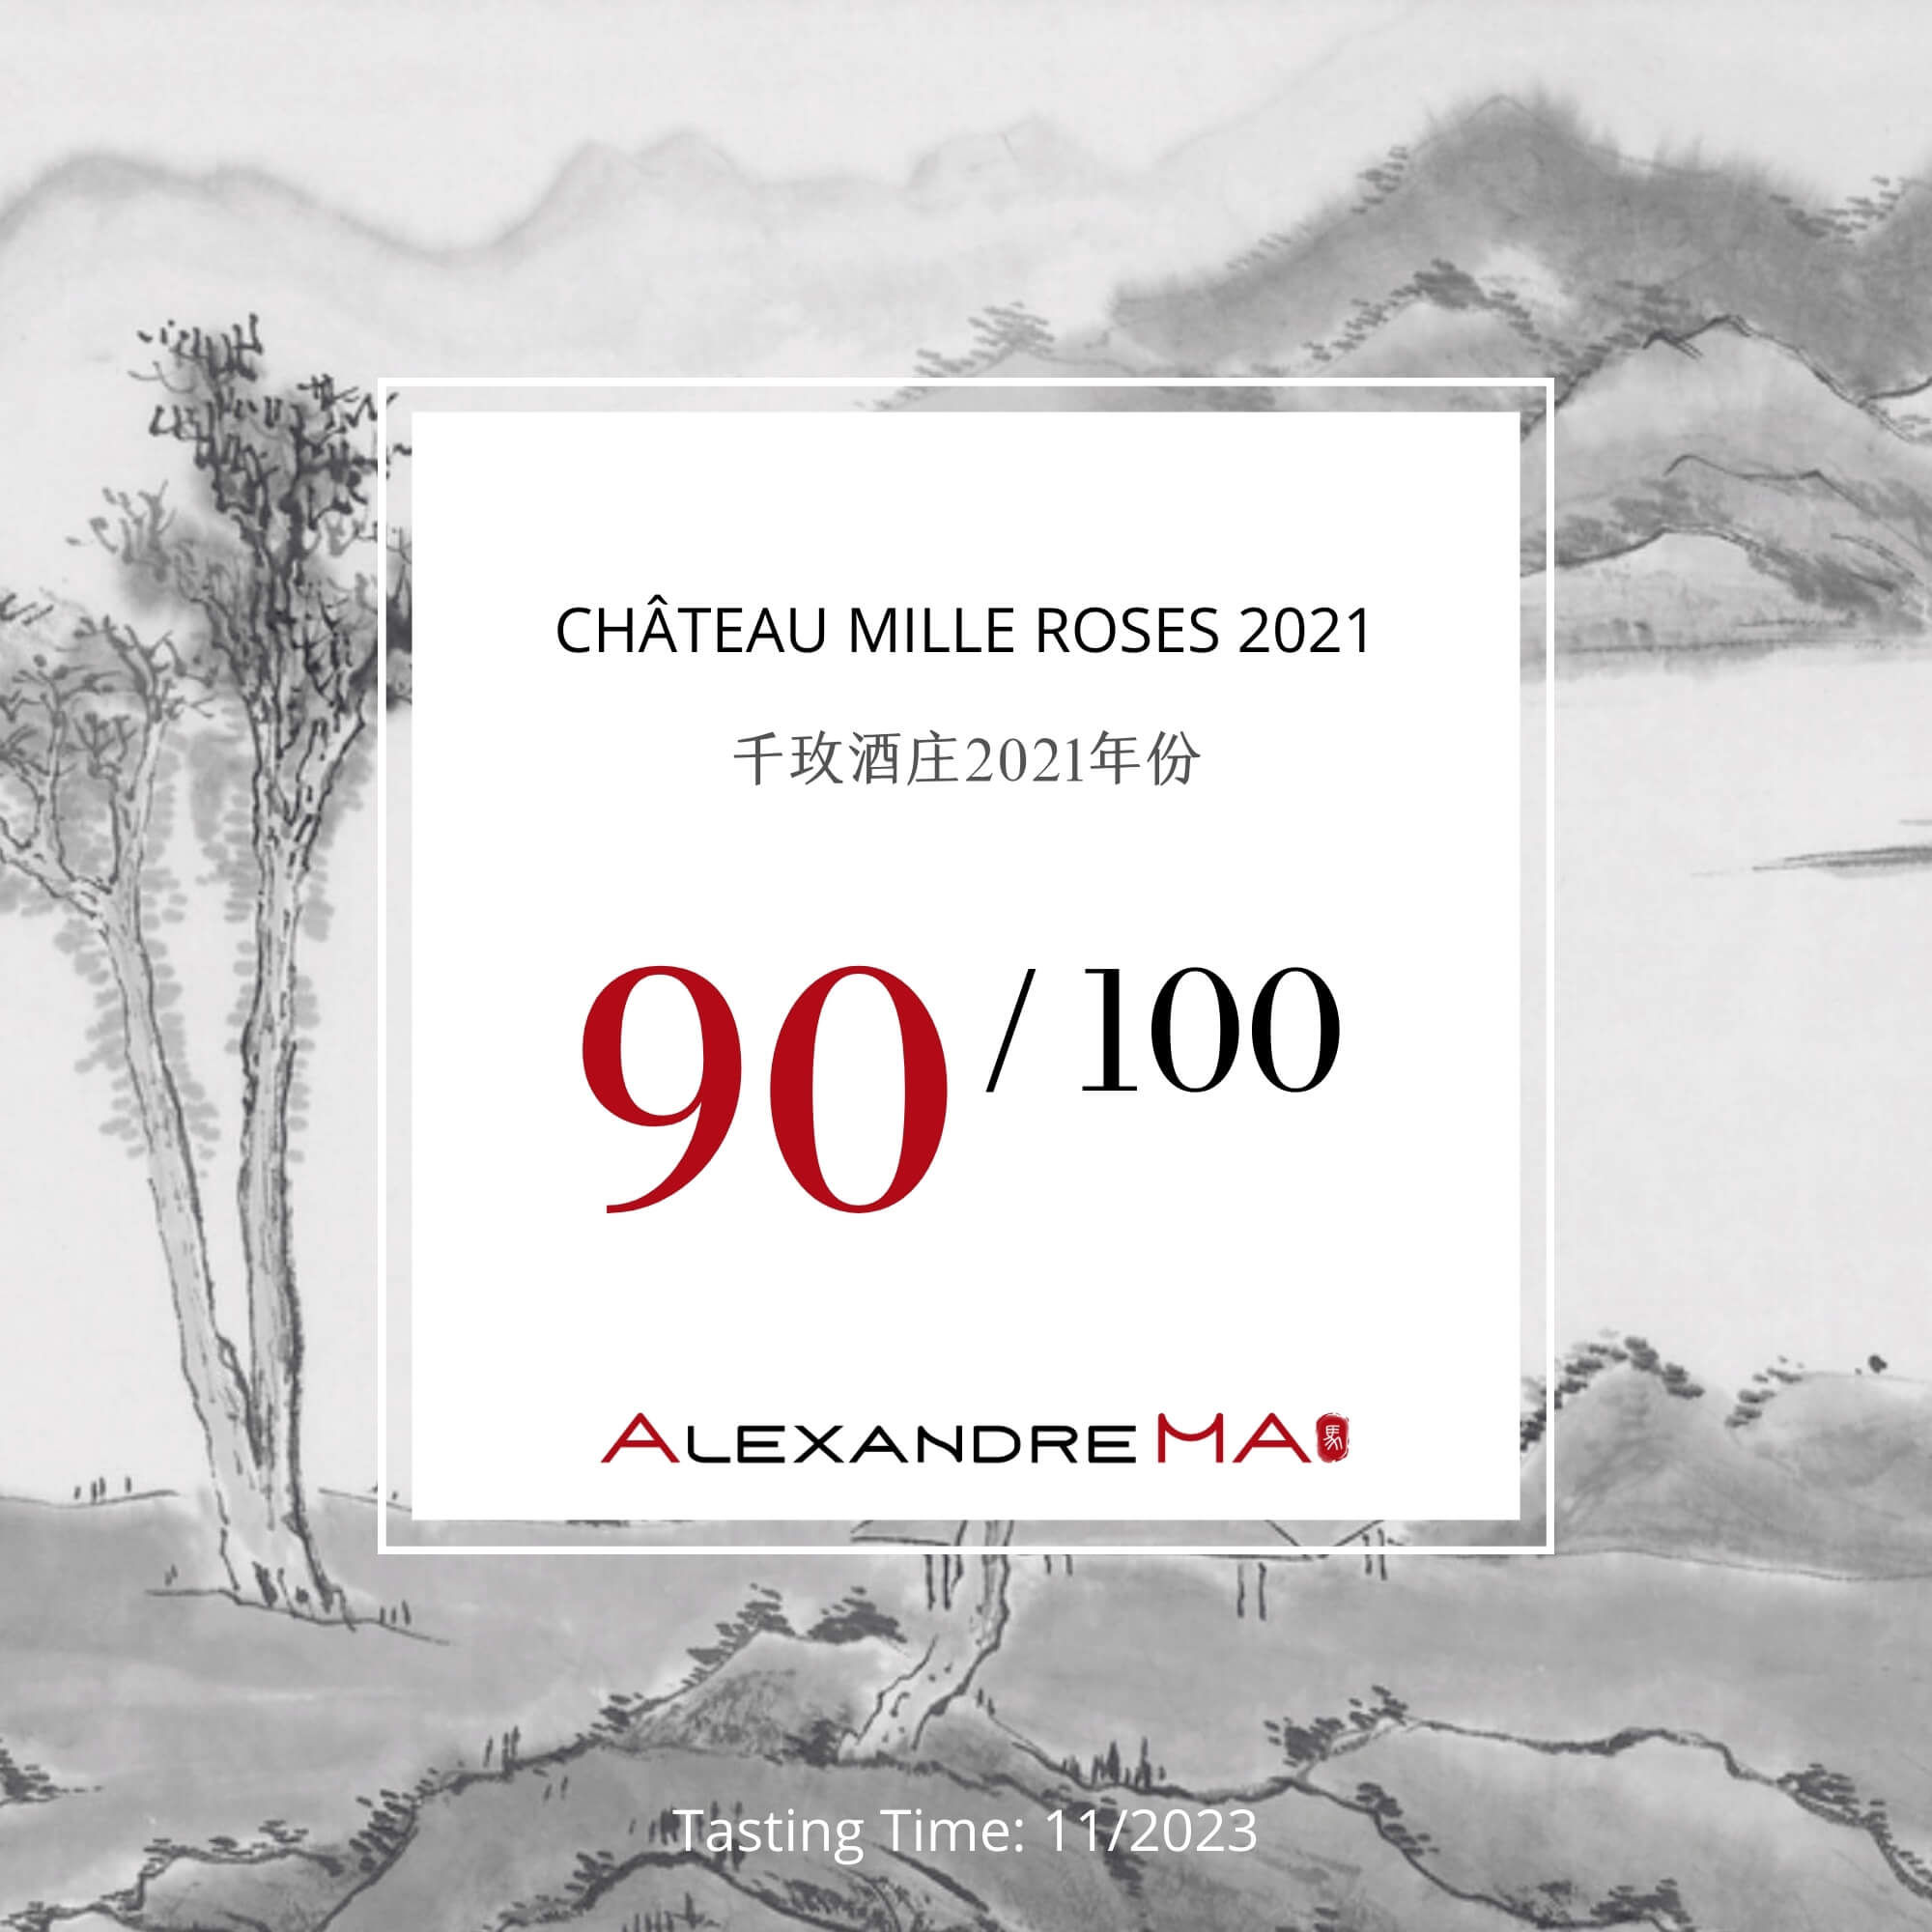 Château Mille Roses 2021 - Alexandre MA